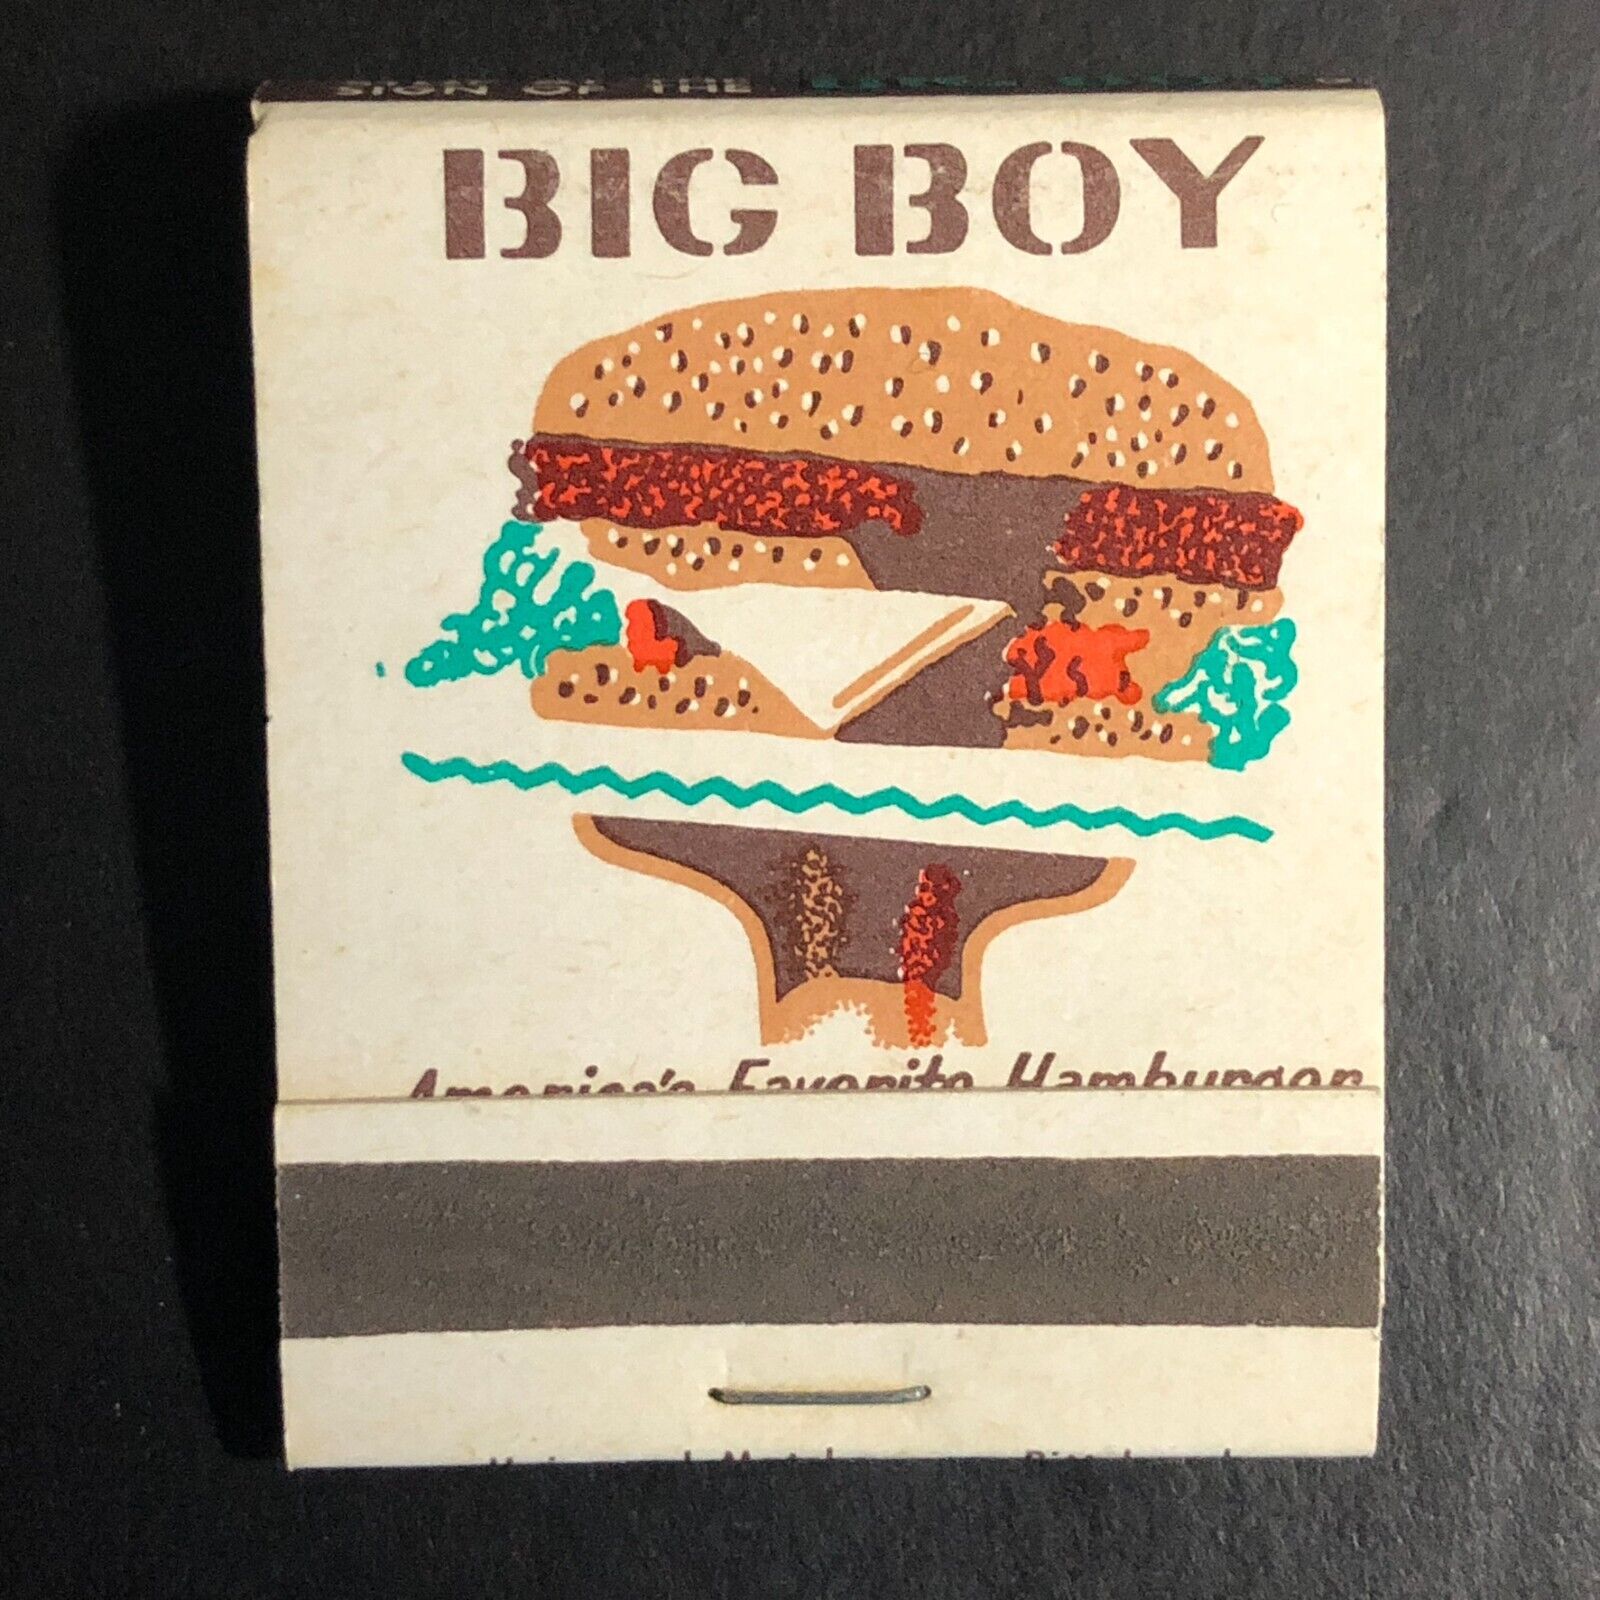 Big Boy Hamburger Restaurants Coast to Coast Full Matchbook c1956-68 VGC Scarce